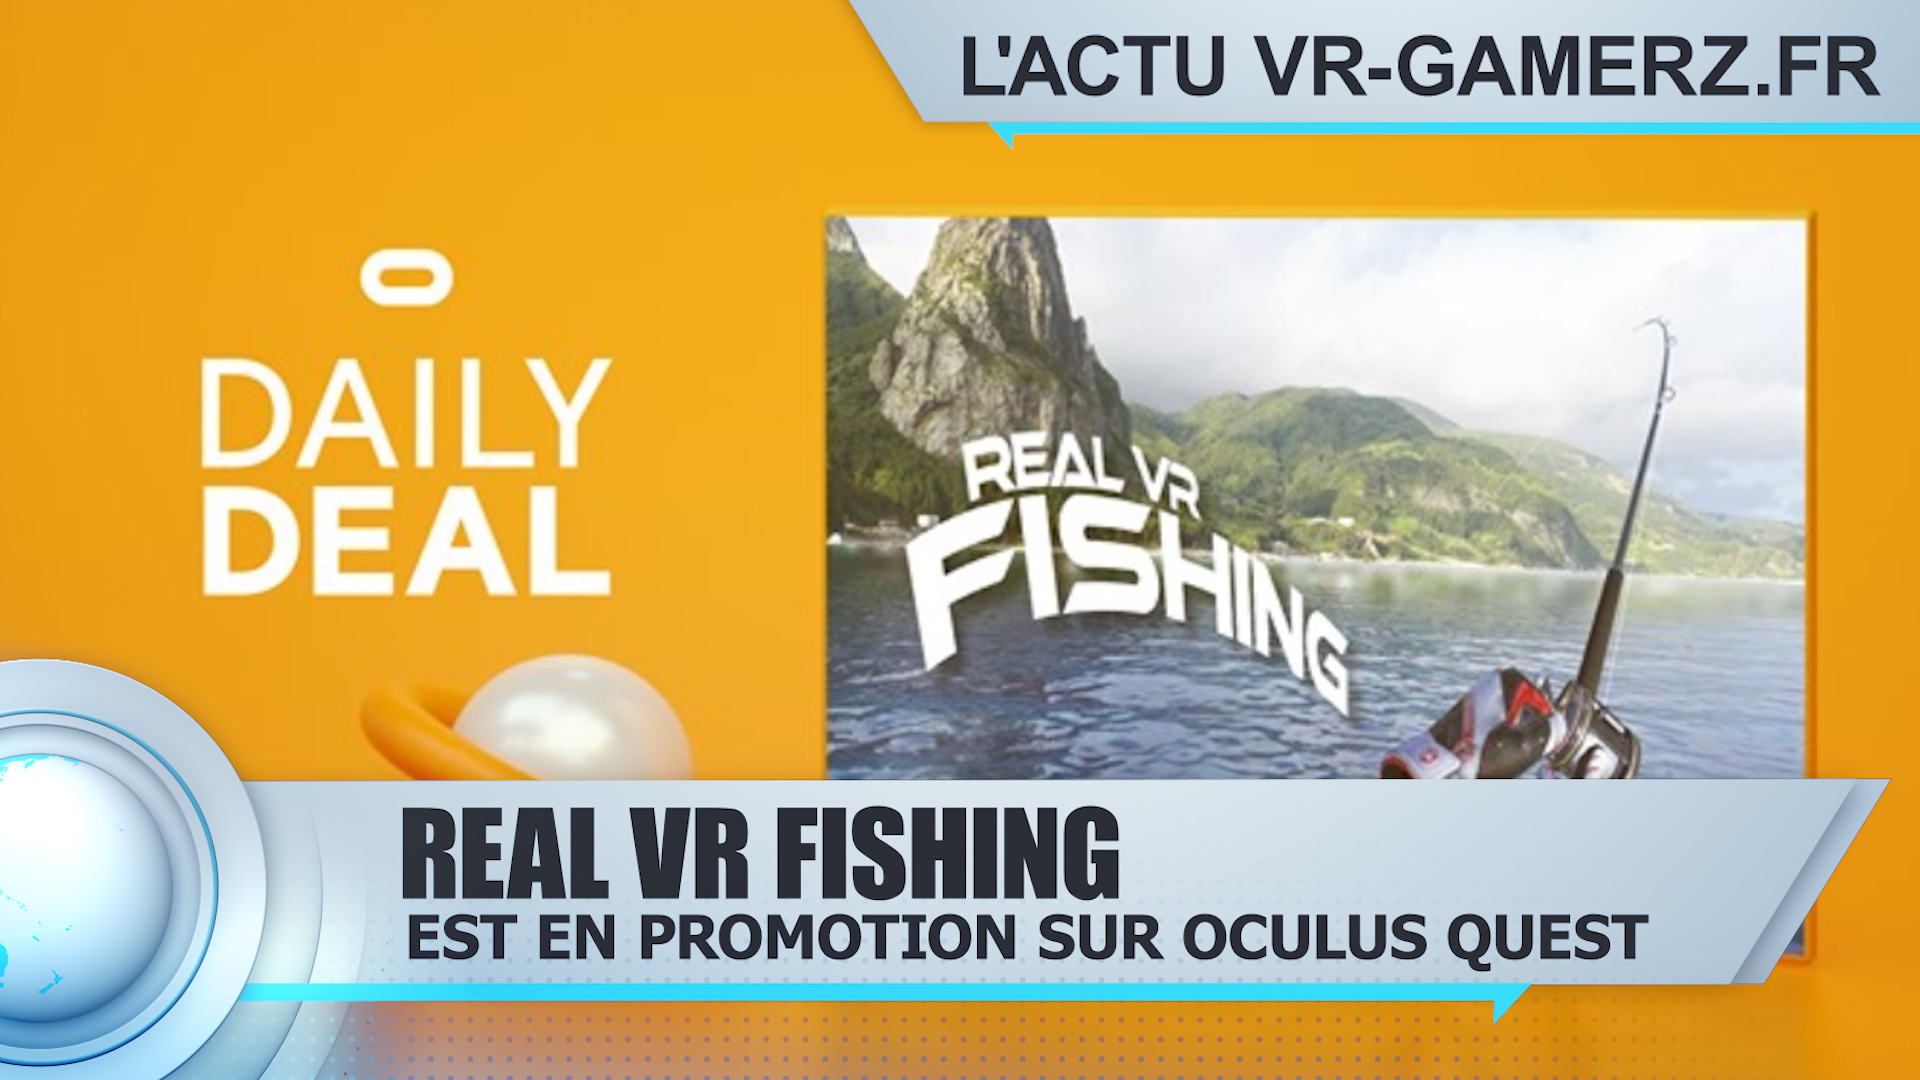 Real VR Fishing Oculus quest est en promotion